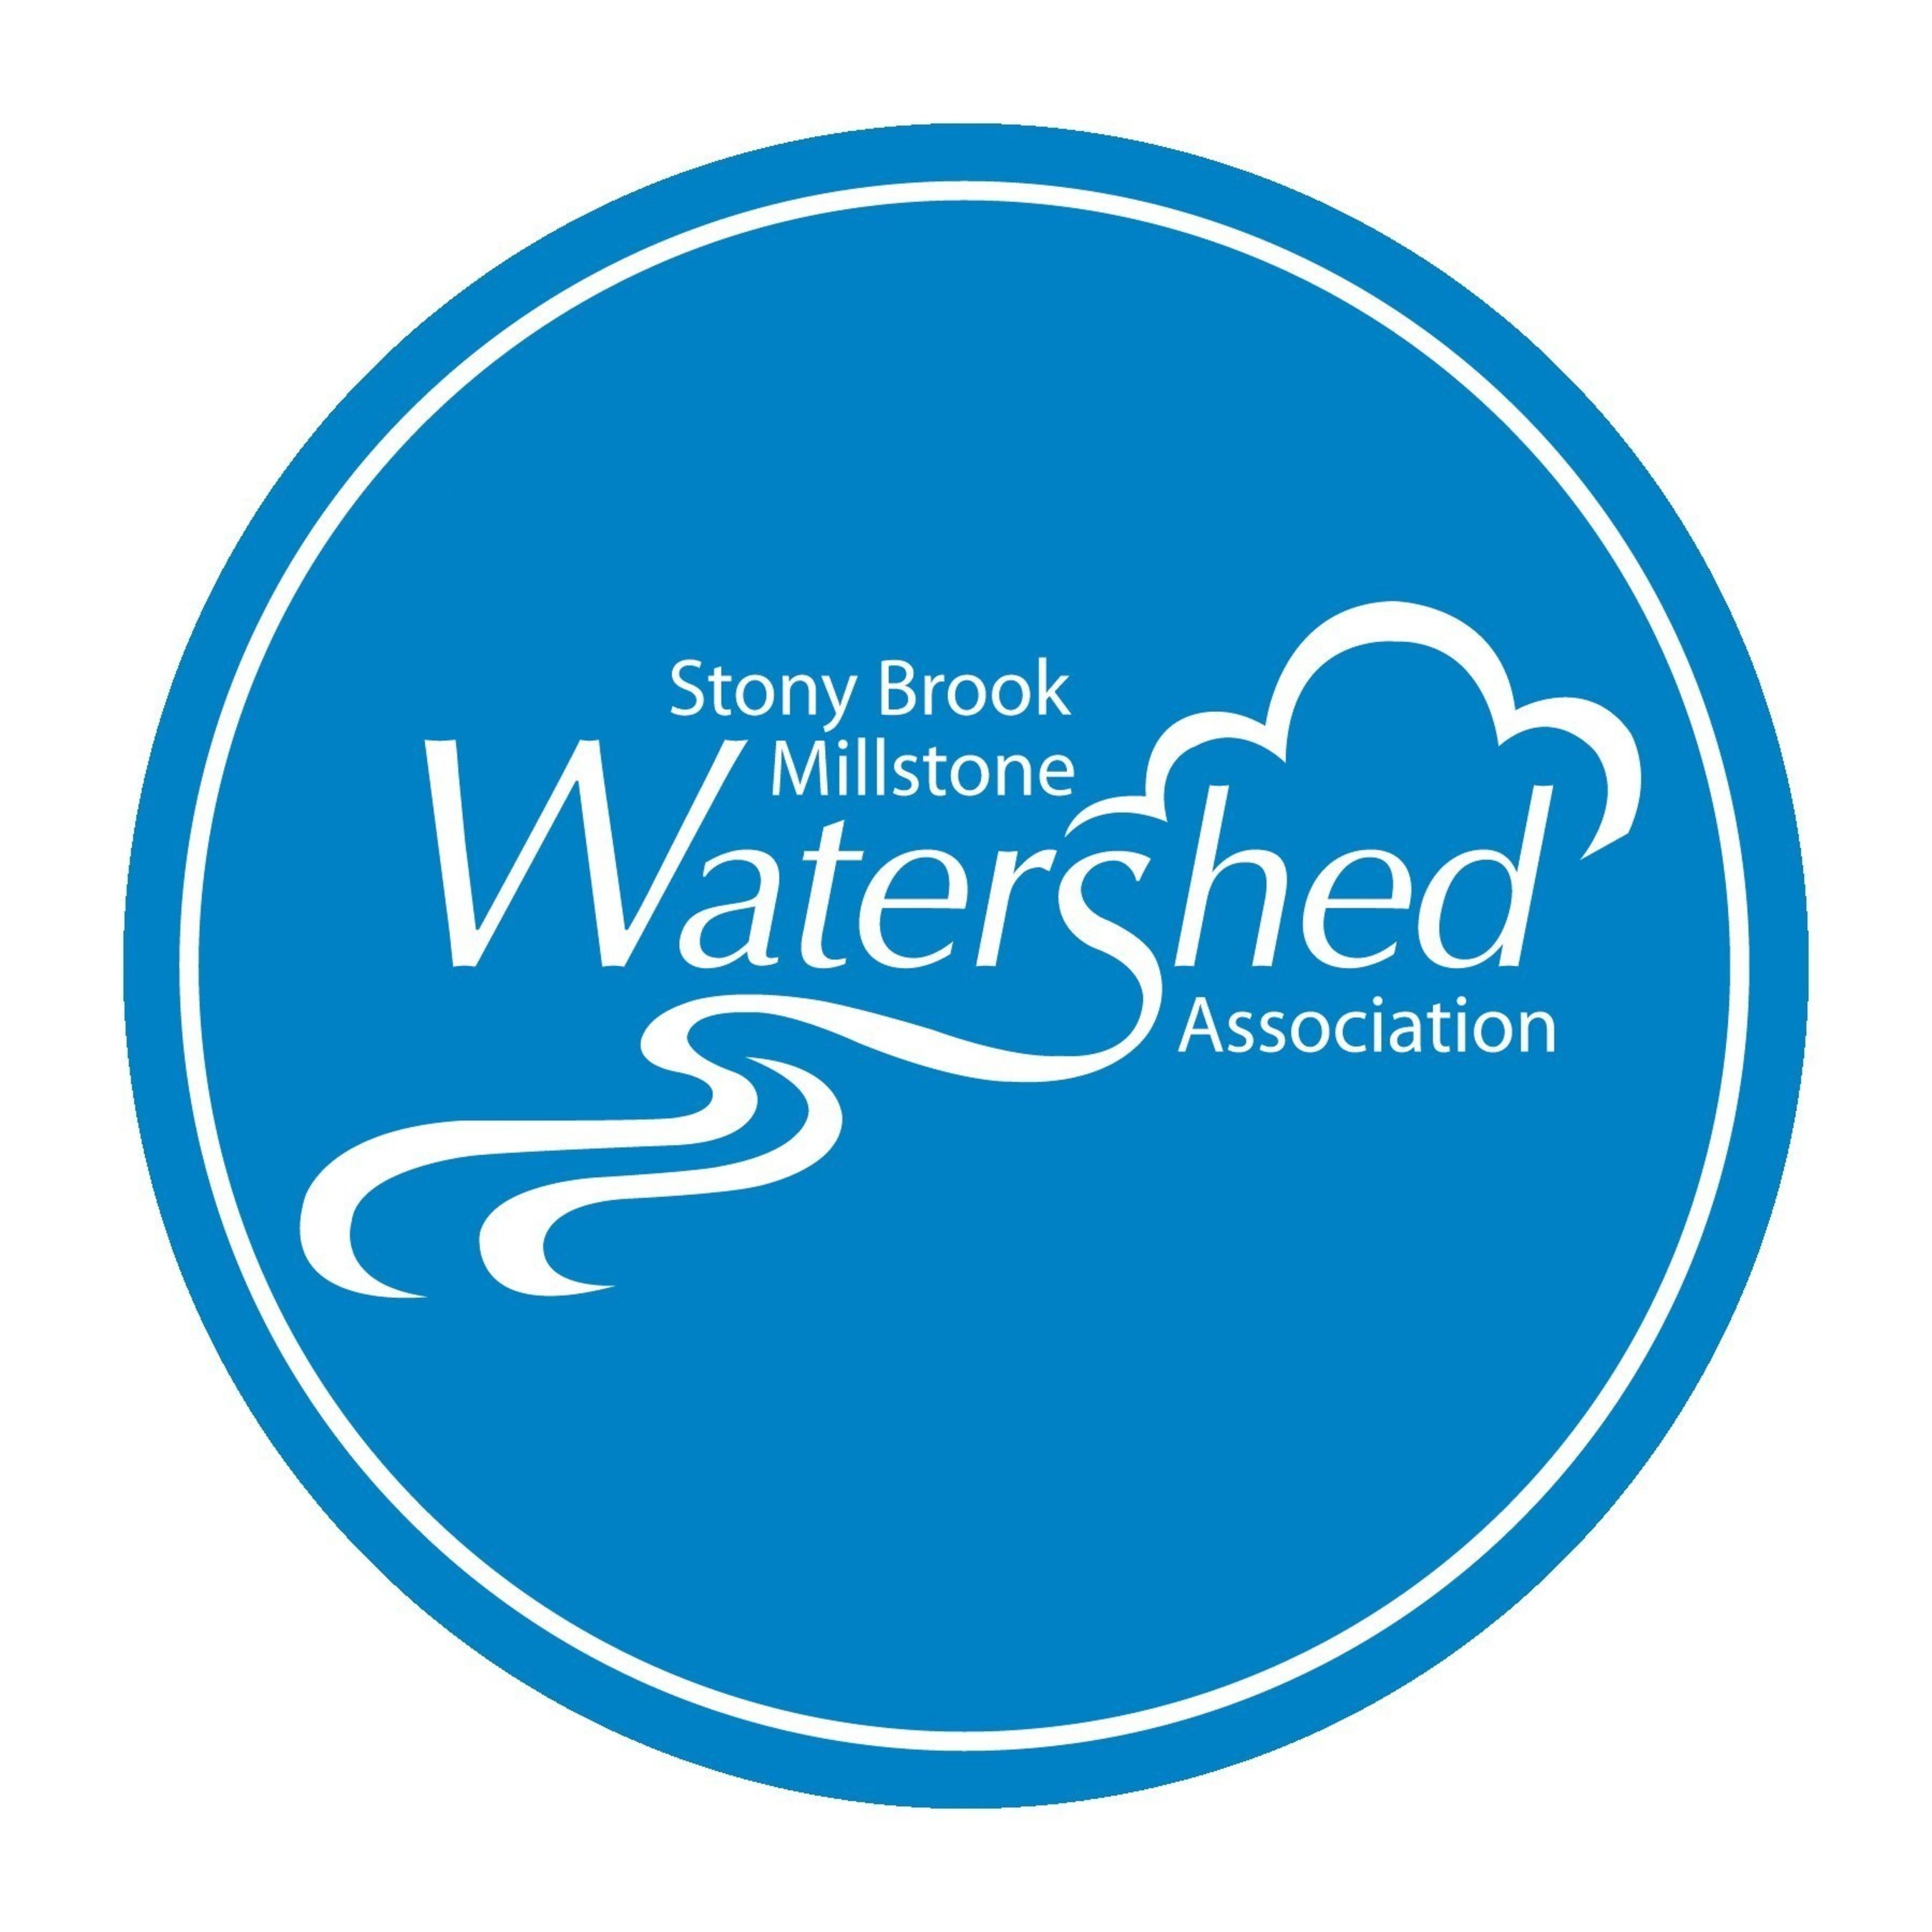 Stony Brook Millstone Watershed Association logo